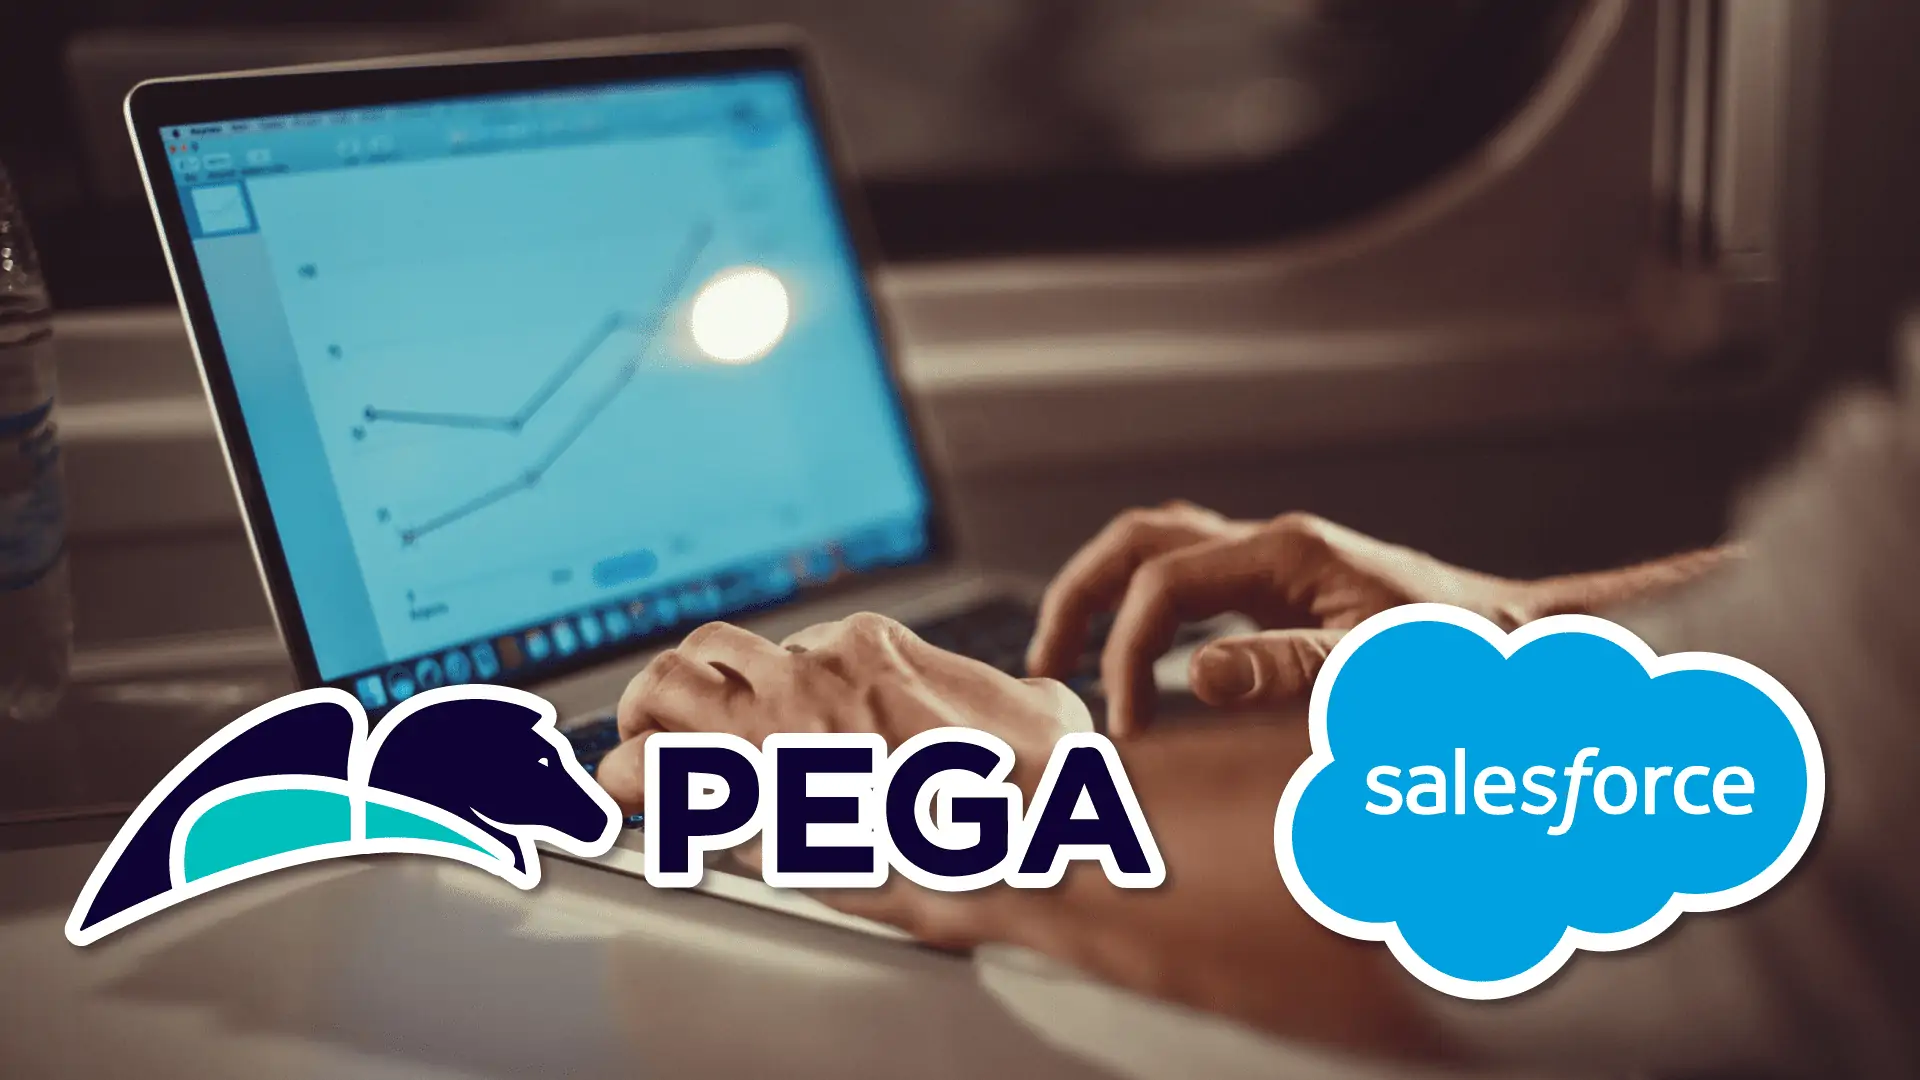 pegasystems vs salesforce, pegasystems software, pegasystems competitors, pegasystems pricing